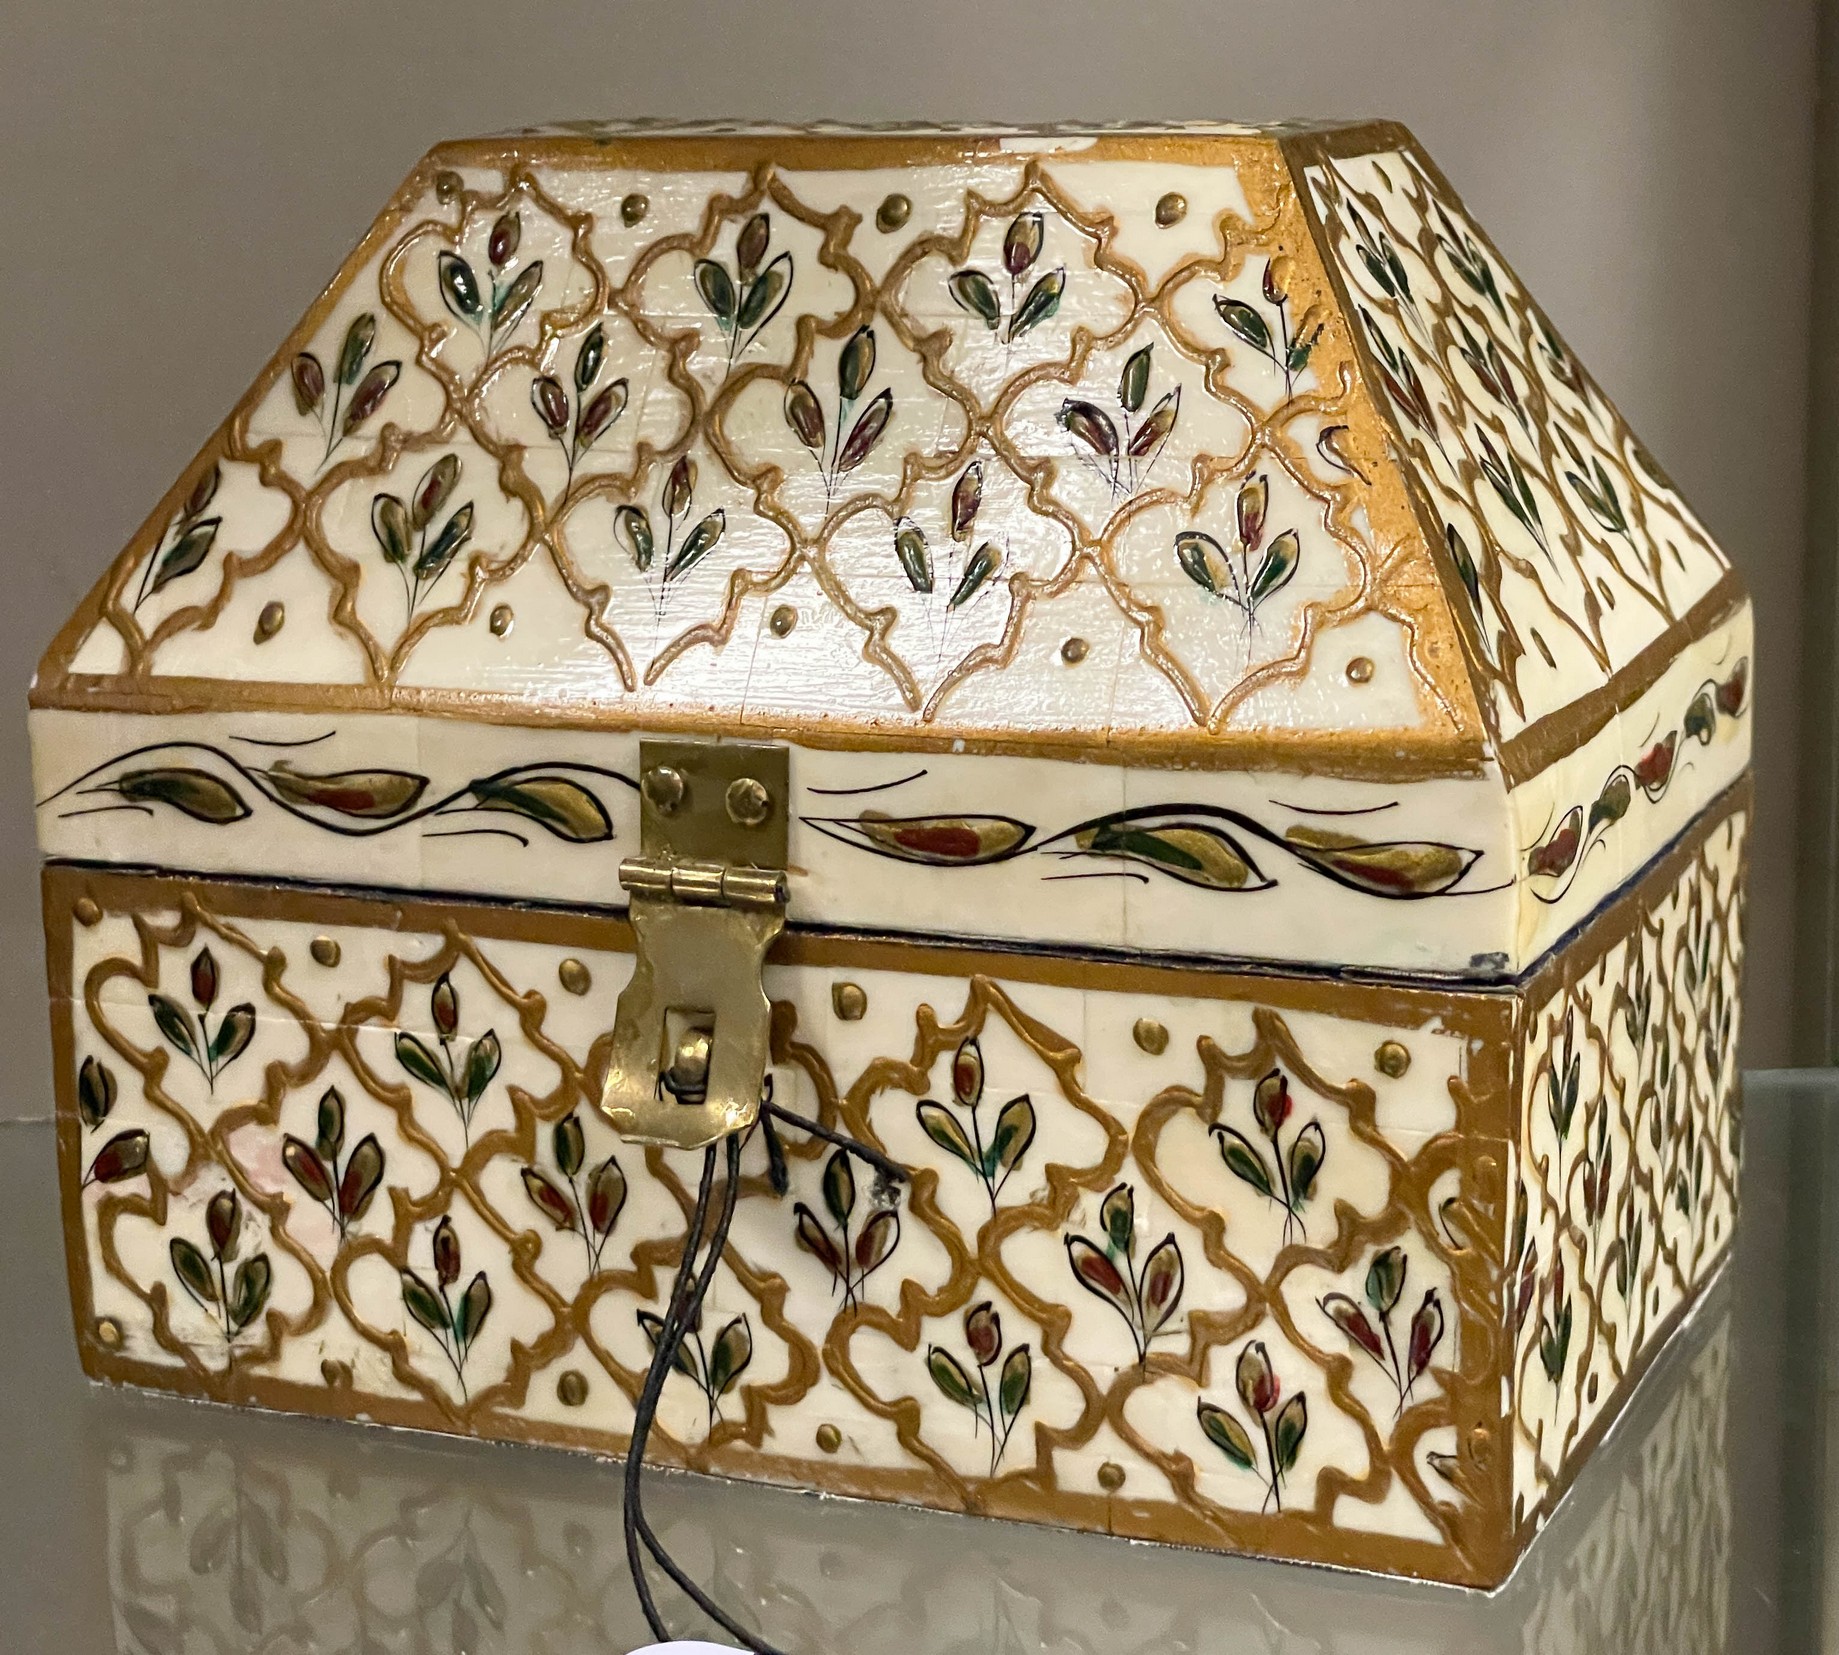 Painted bone jewelry casket box,